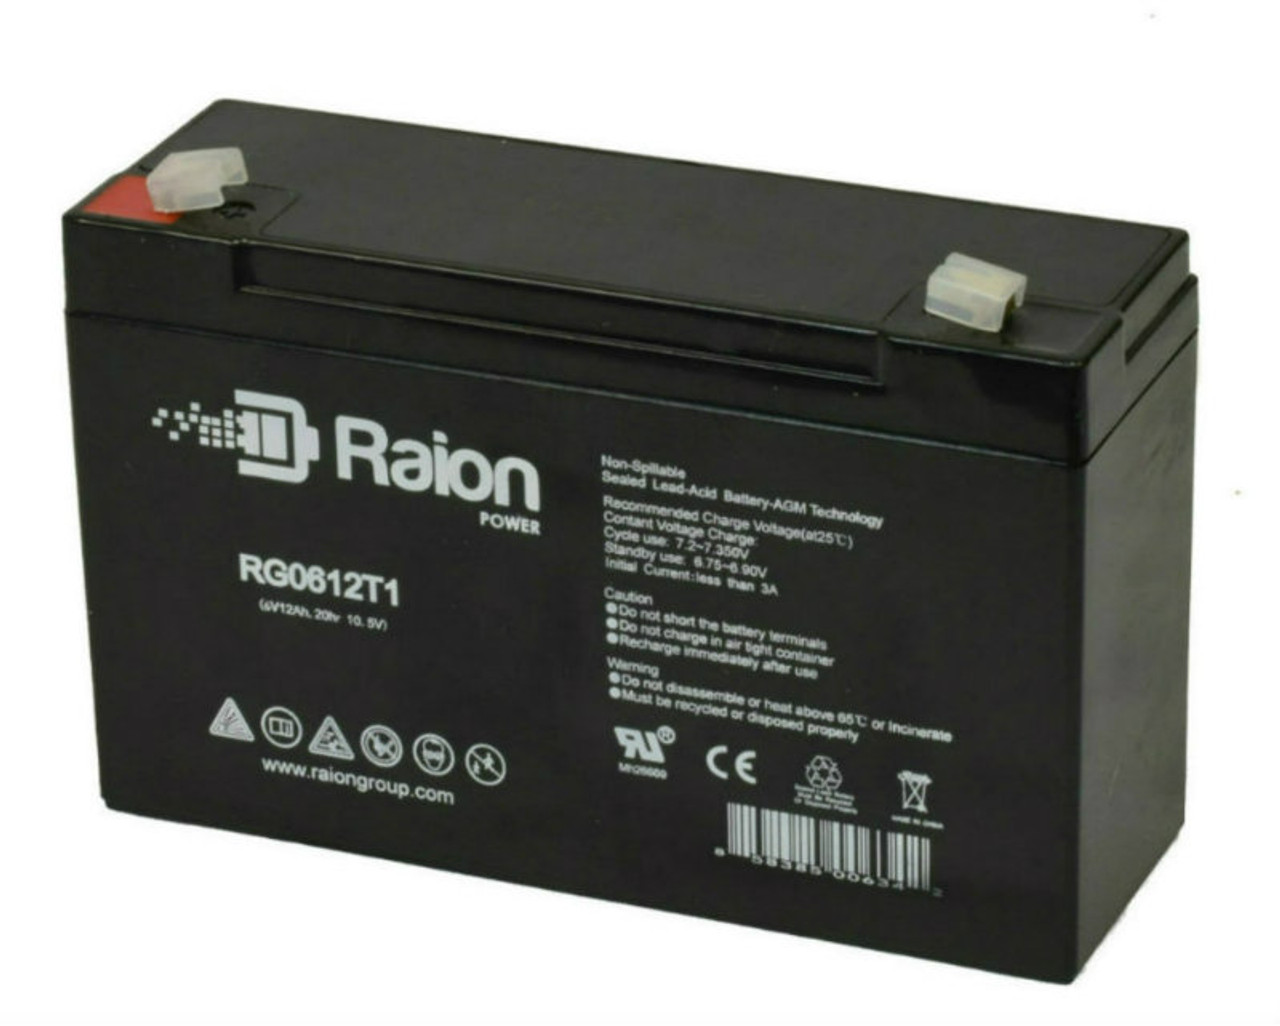 Raion Power RG06120T1 Replacement 6V 12Ah Emergency Light Battery for Sonnenschein 2005